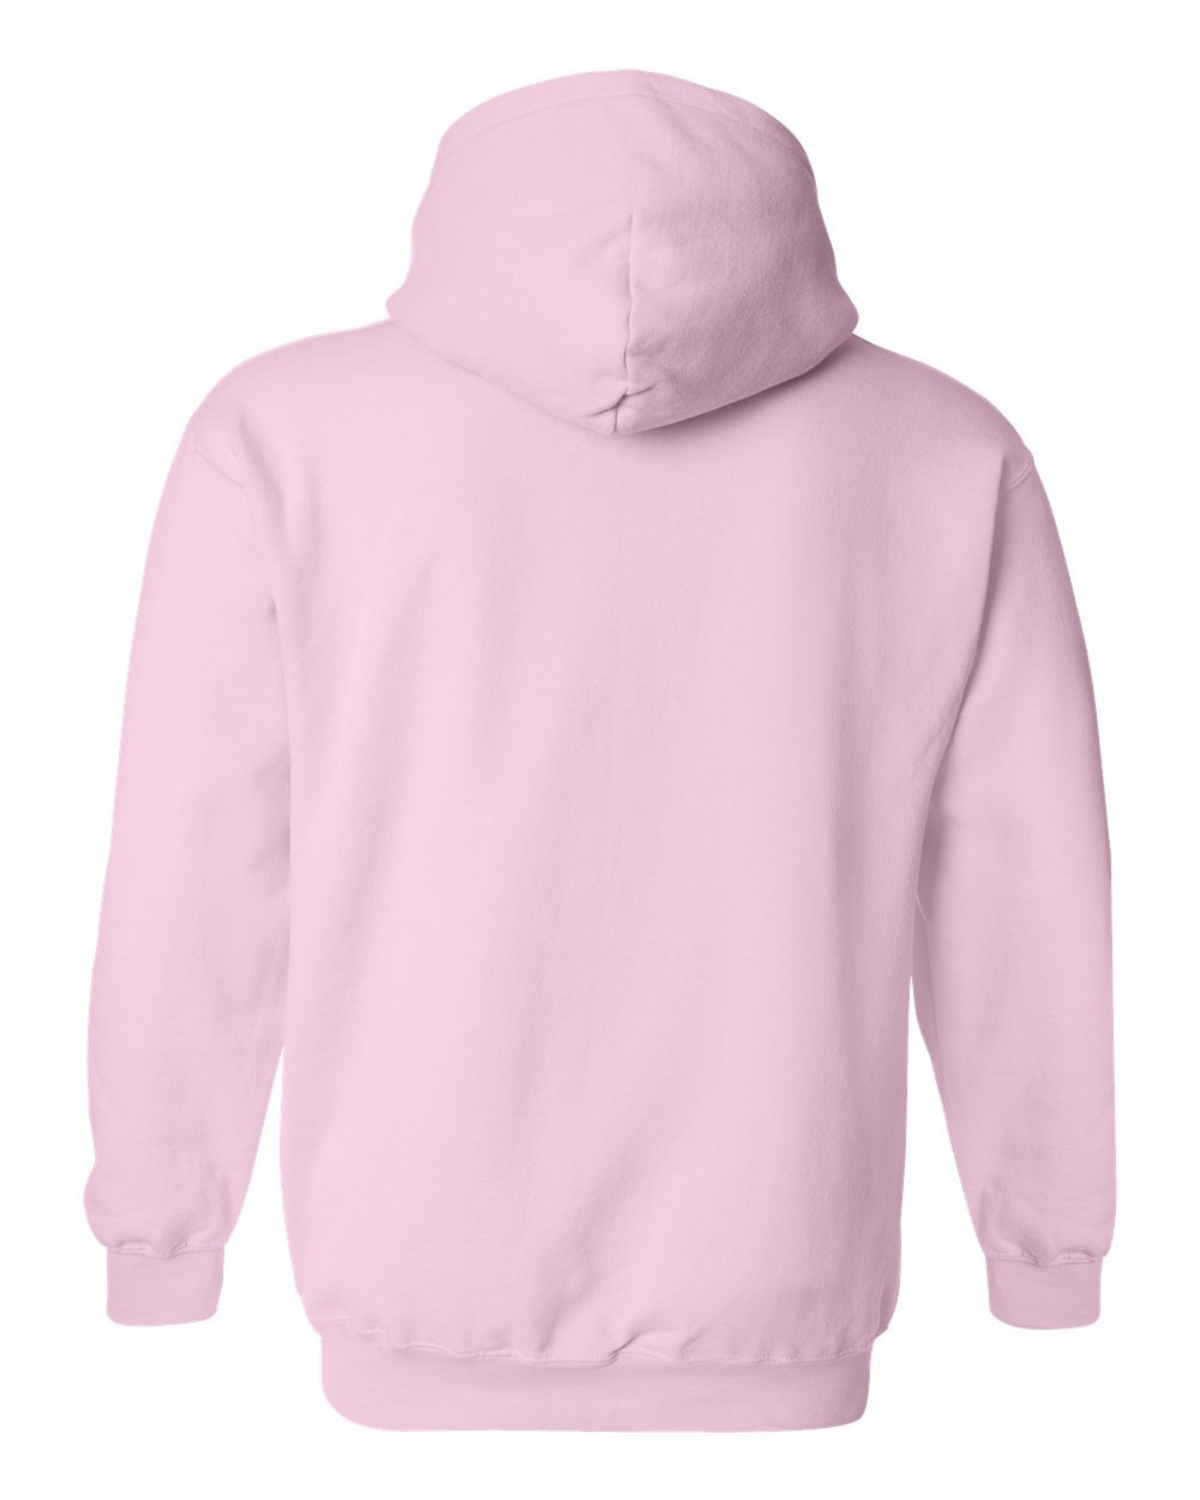 SHOWTIME Queer to Stay Logo Fleece Hooded Sweatshirt